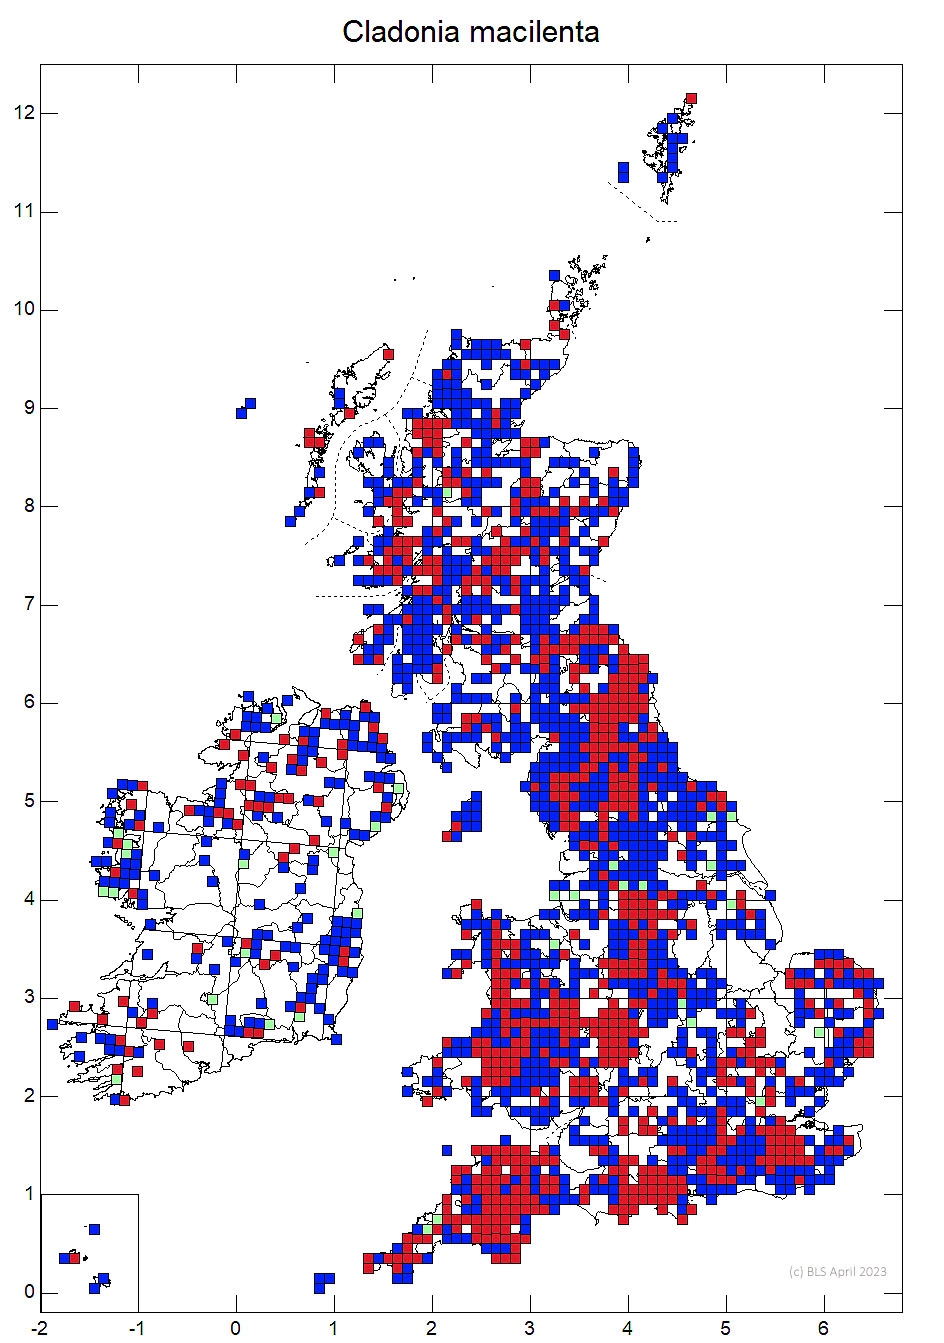 Cladonia macilenta 10km sq distribution map